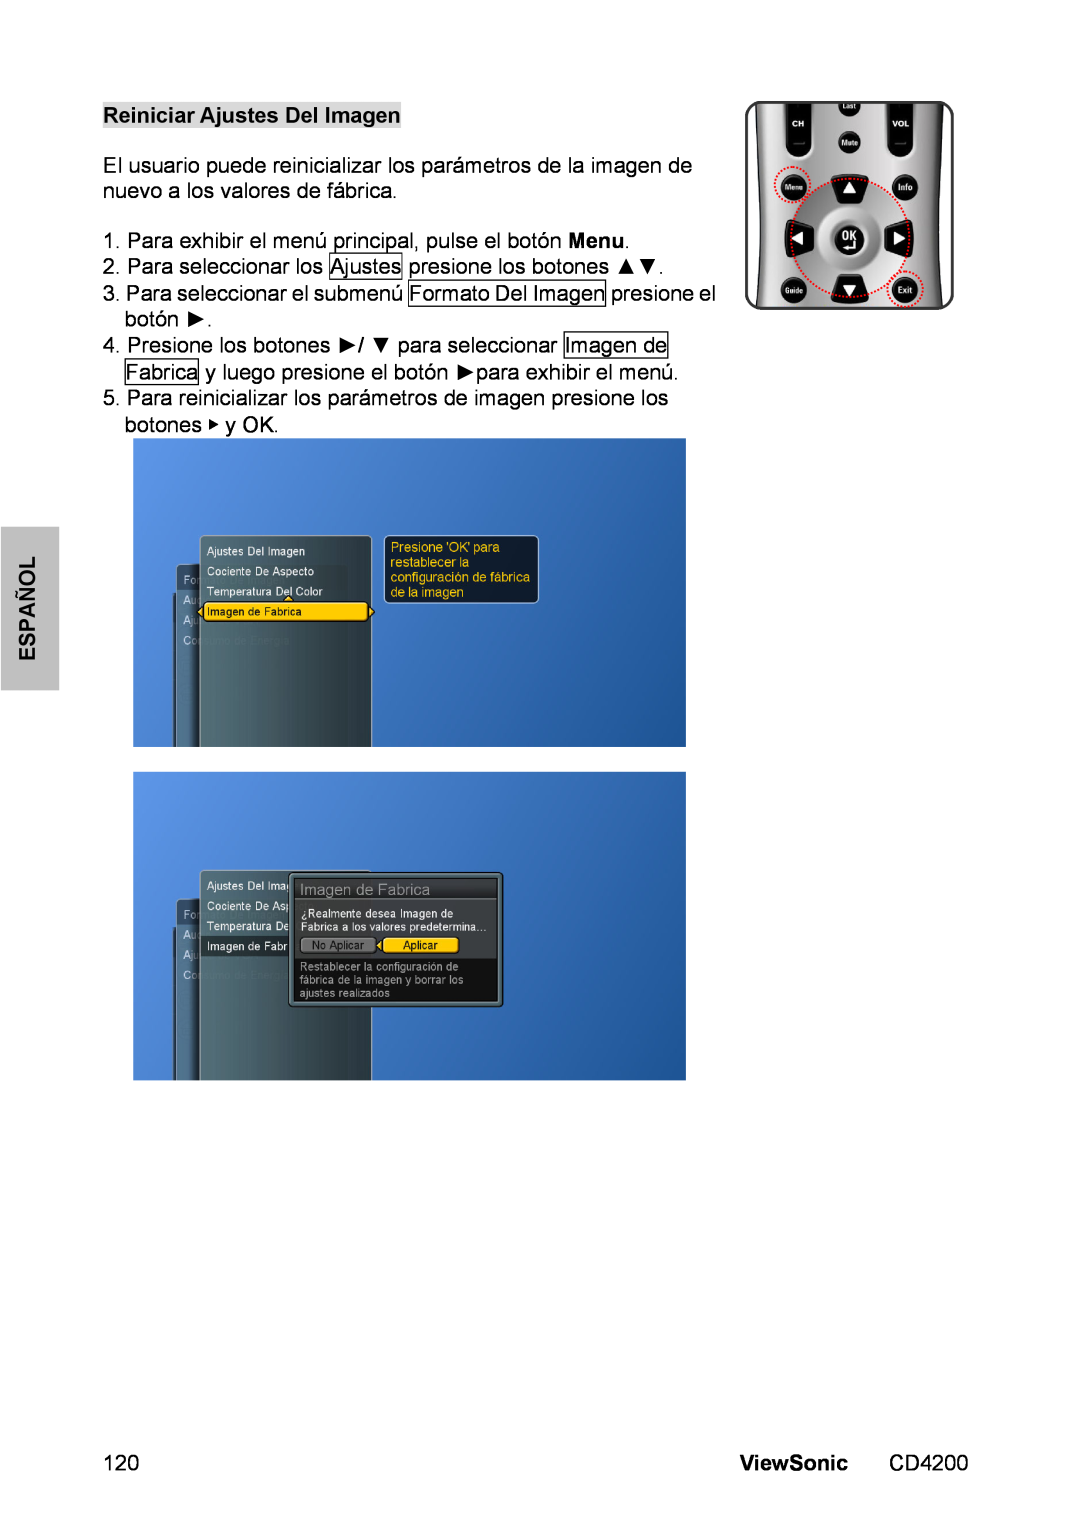 ViewSonic CD4200 manual Reiniciar Ajustes Del Imagen, Español, ViewSonic 